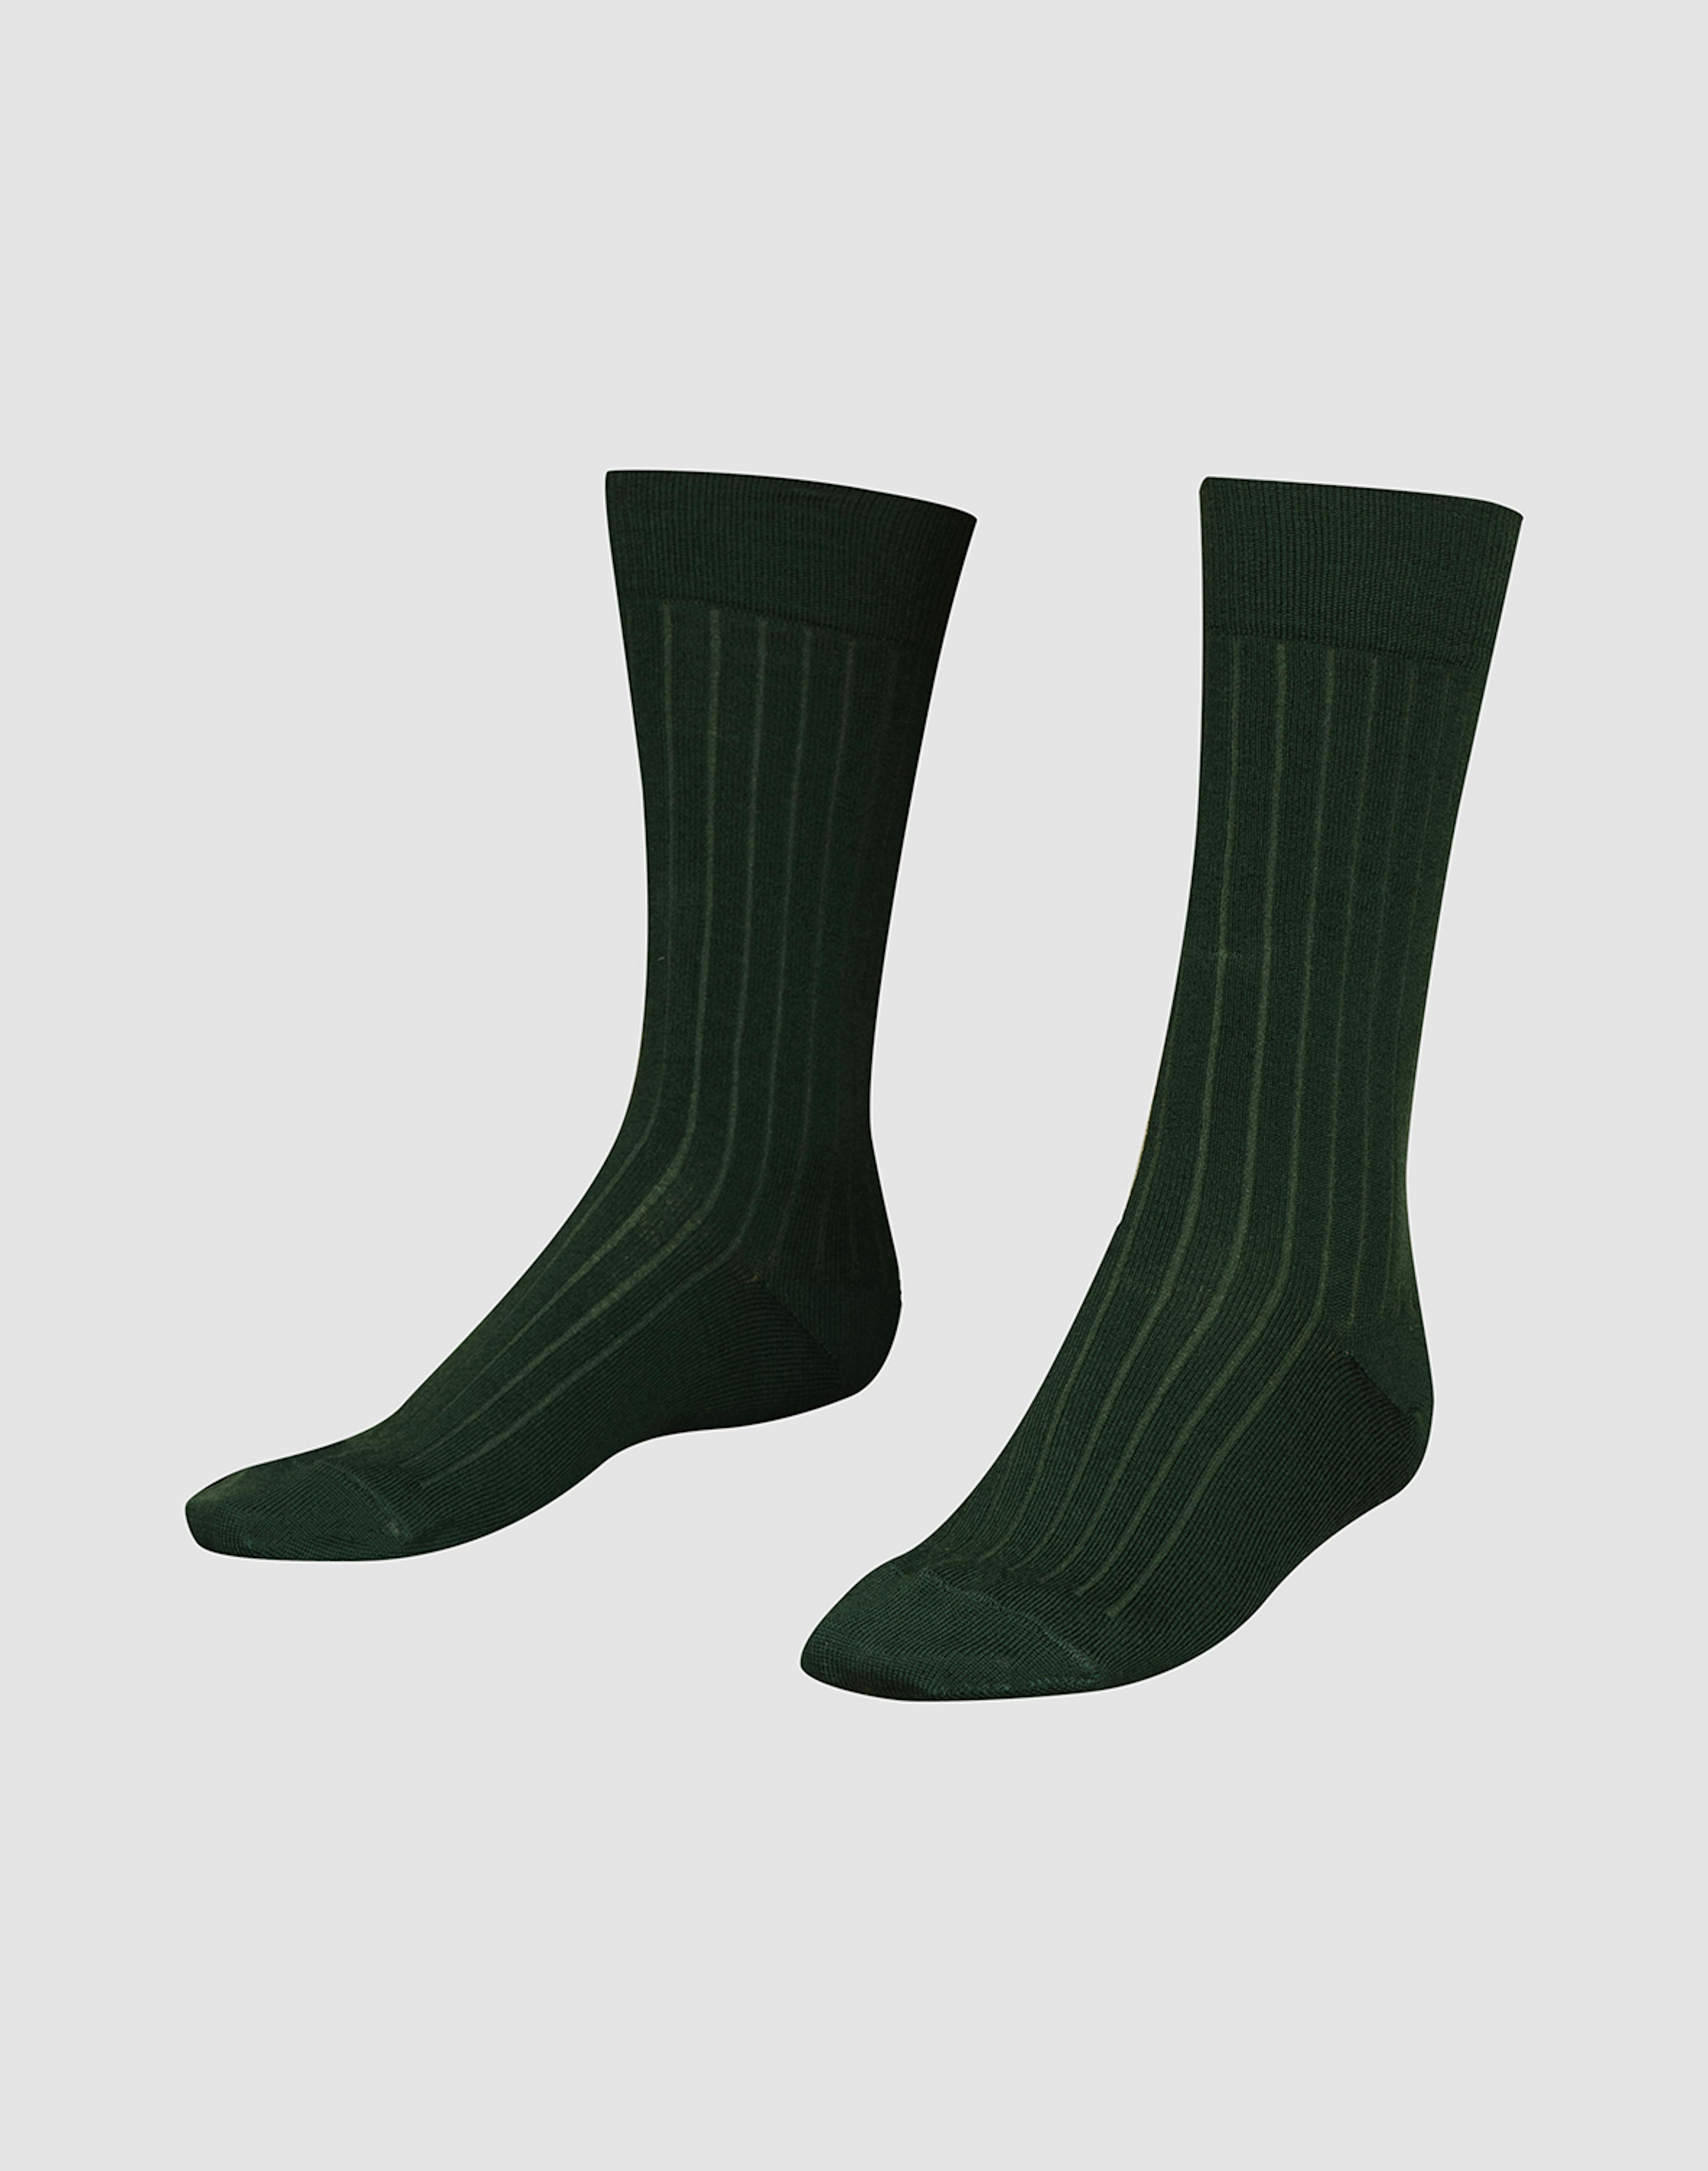 Chaussettes en laine de mérinos - Homme||Merino wool socks - Men’s